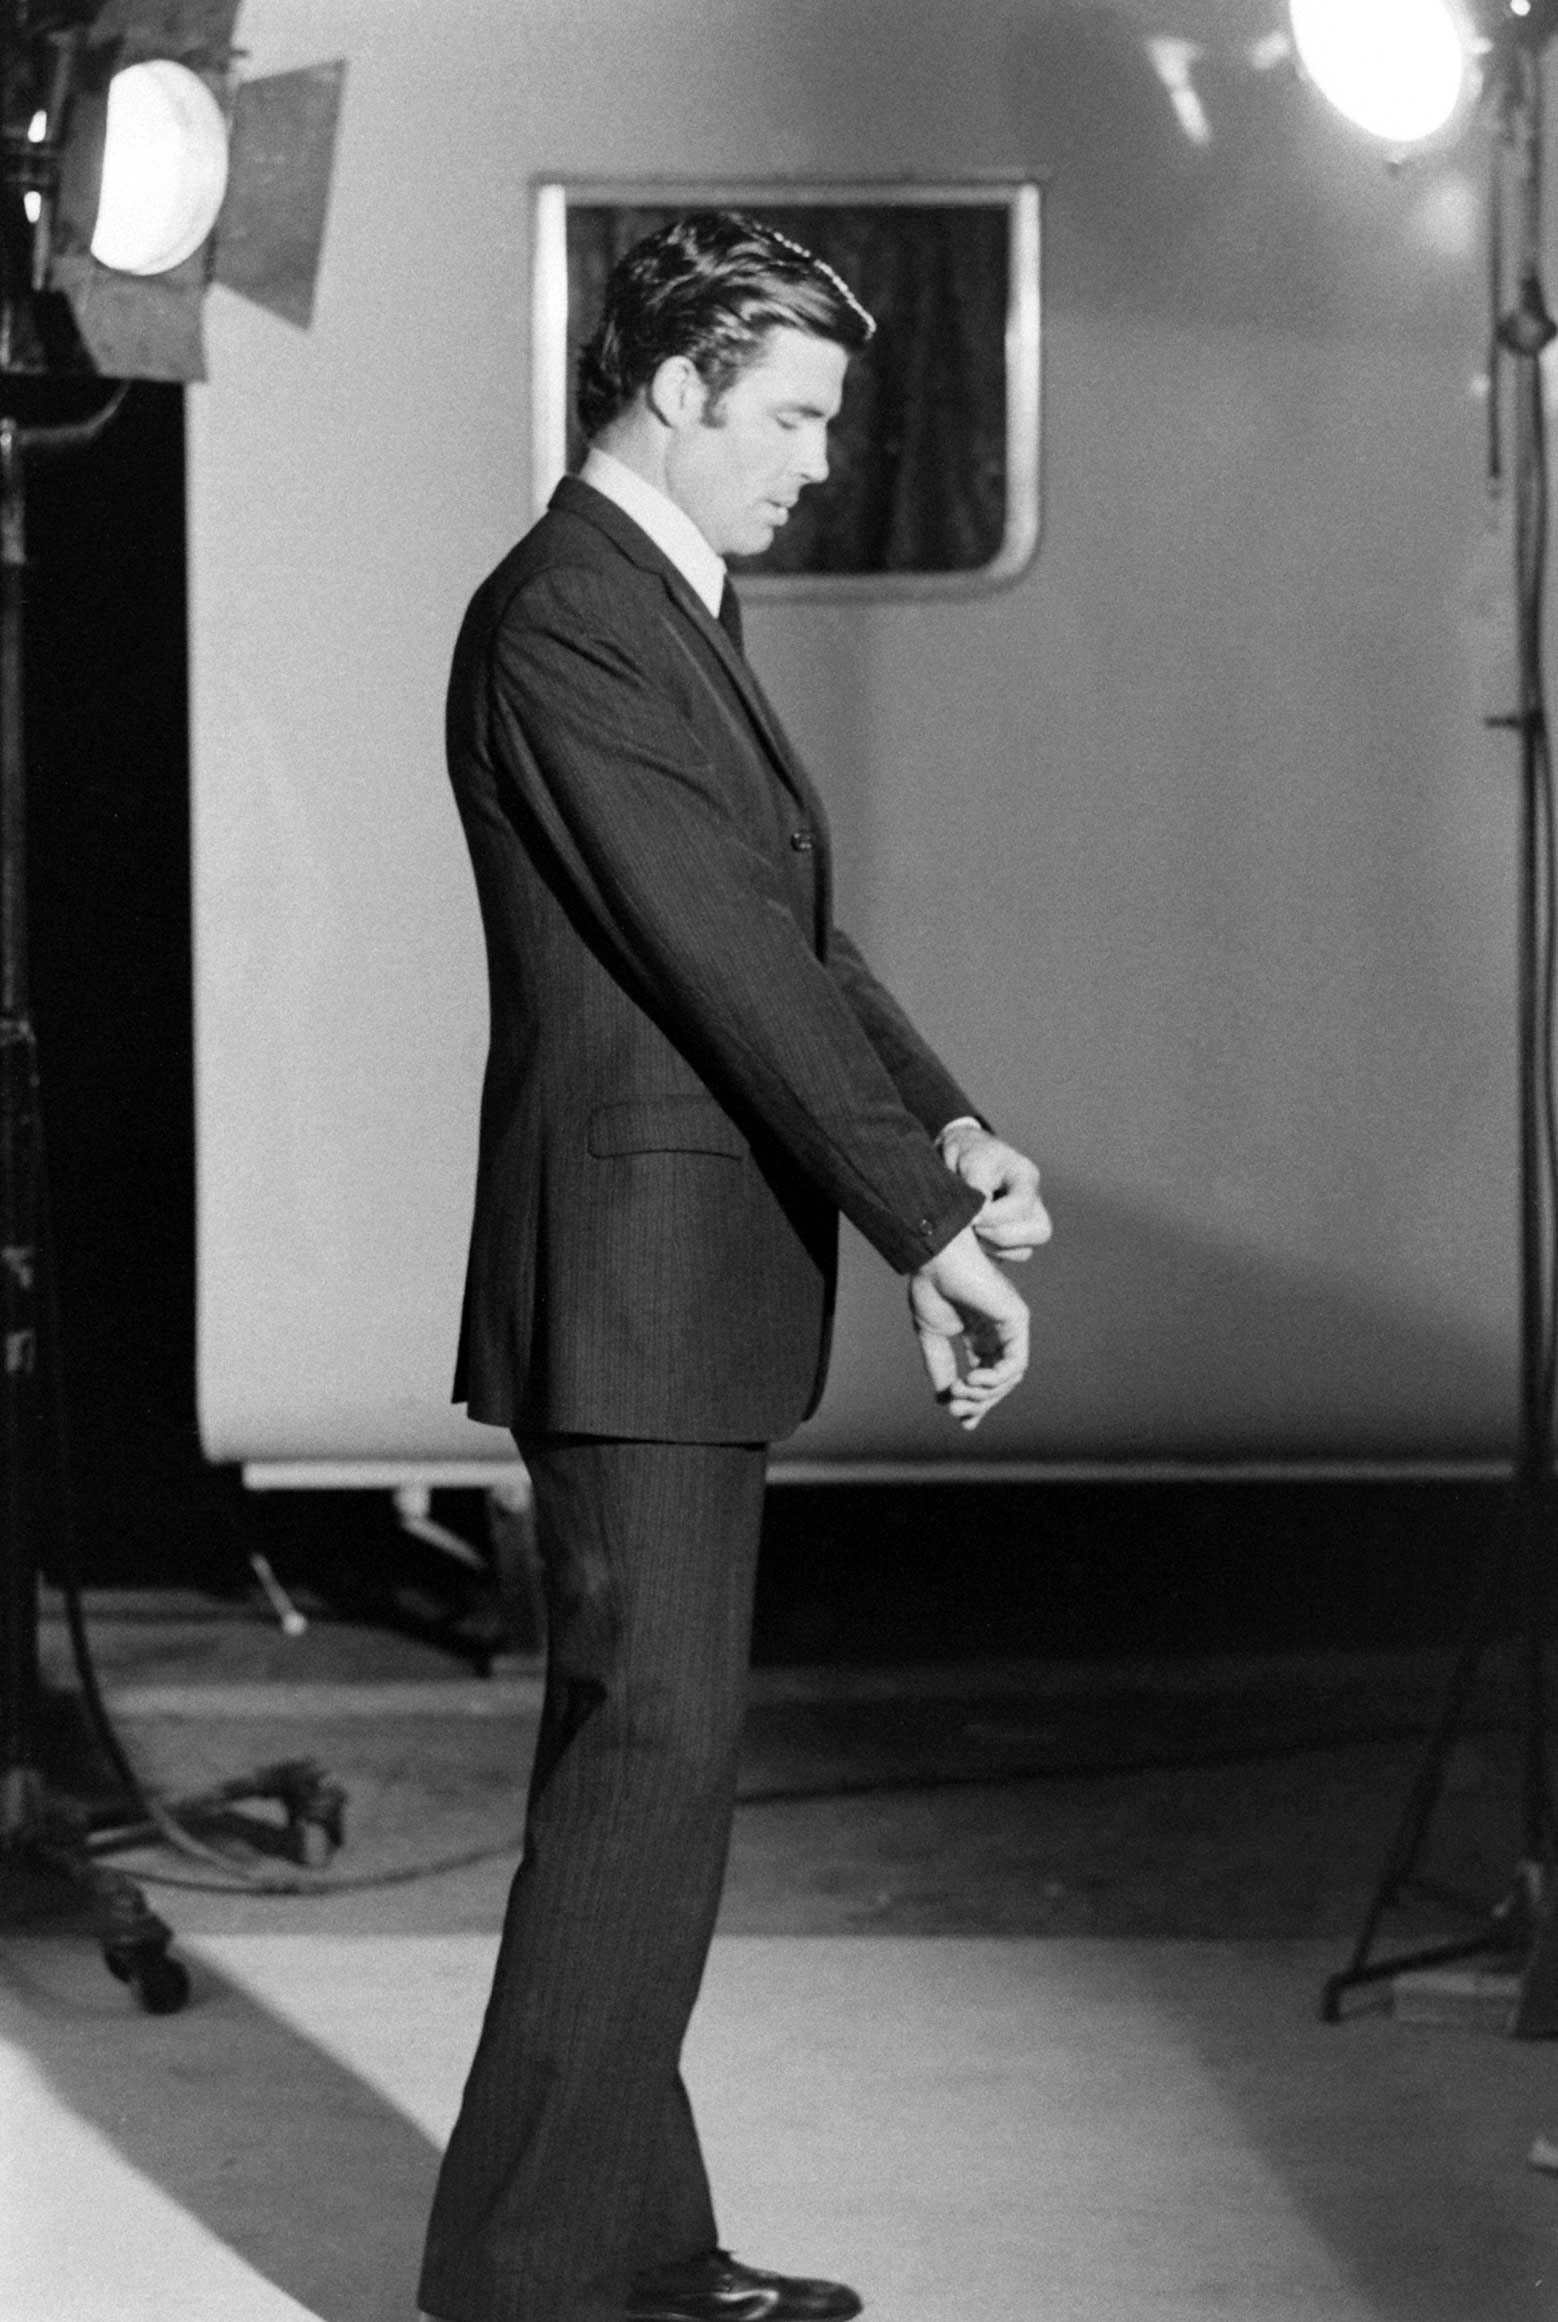 James Bond hopeful Robert Campbell adjusts his shirt and jacket, 1967.